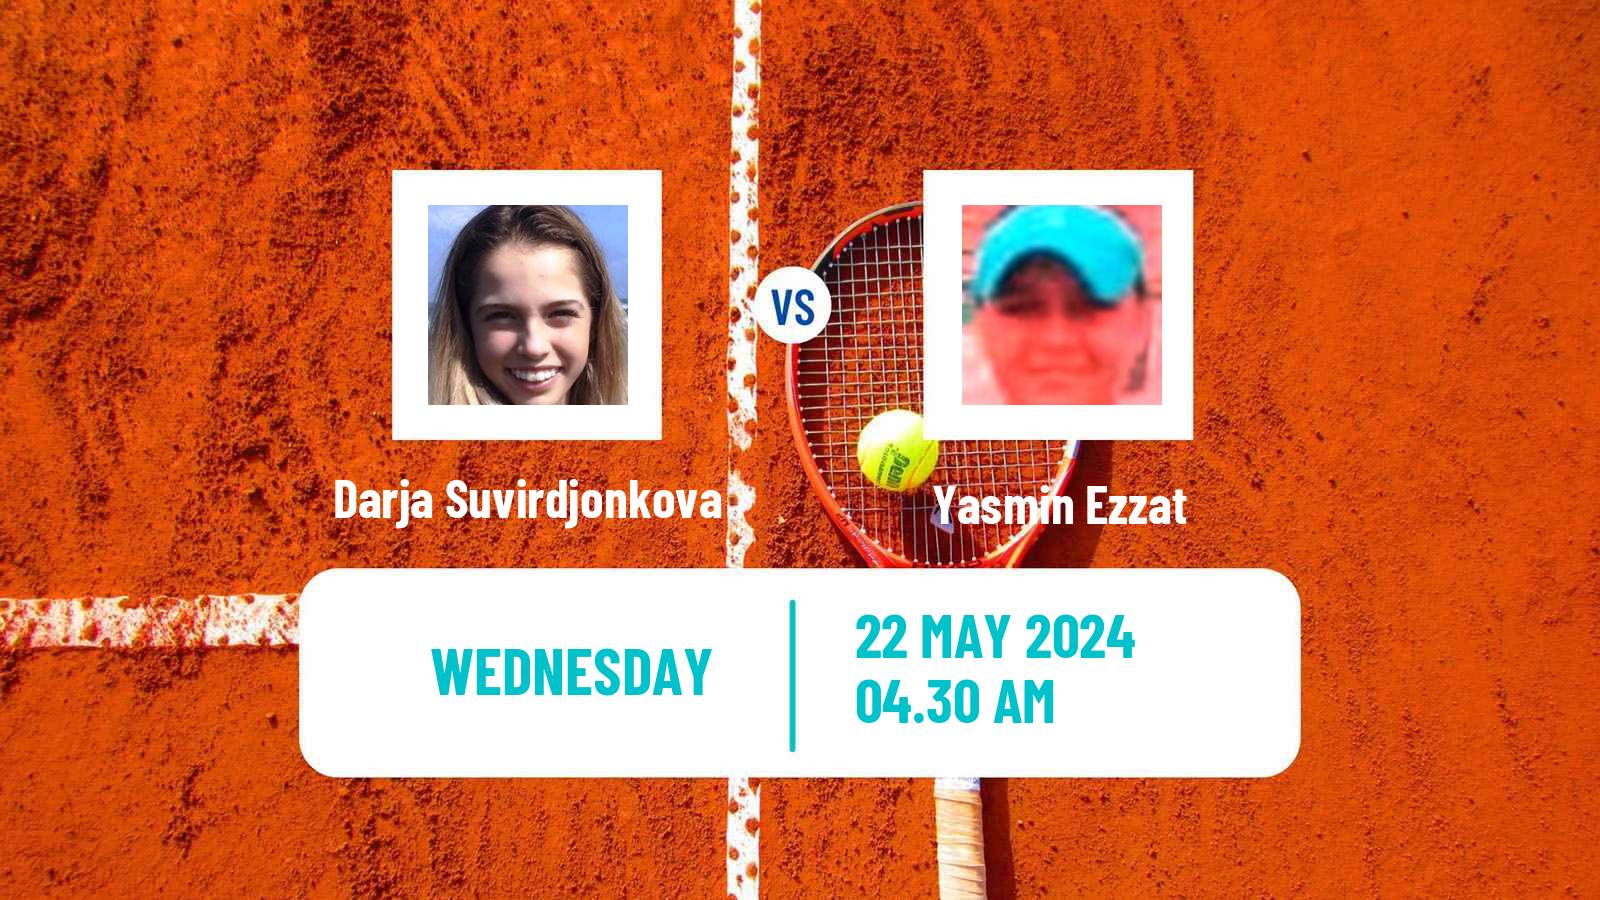 Tennis ITF W15 Monastir 19 Women Darja Suvirdjonkova - Yasmin Ezzat